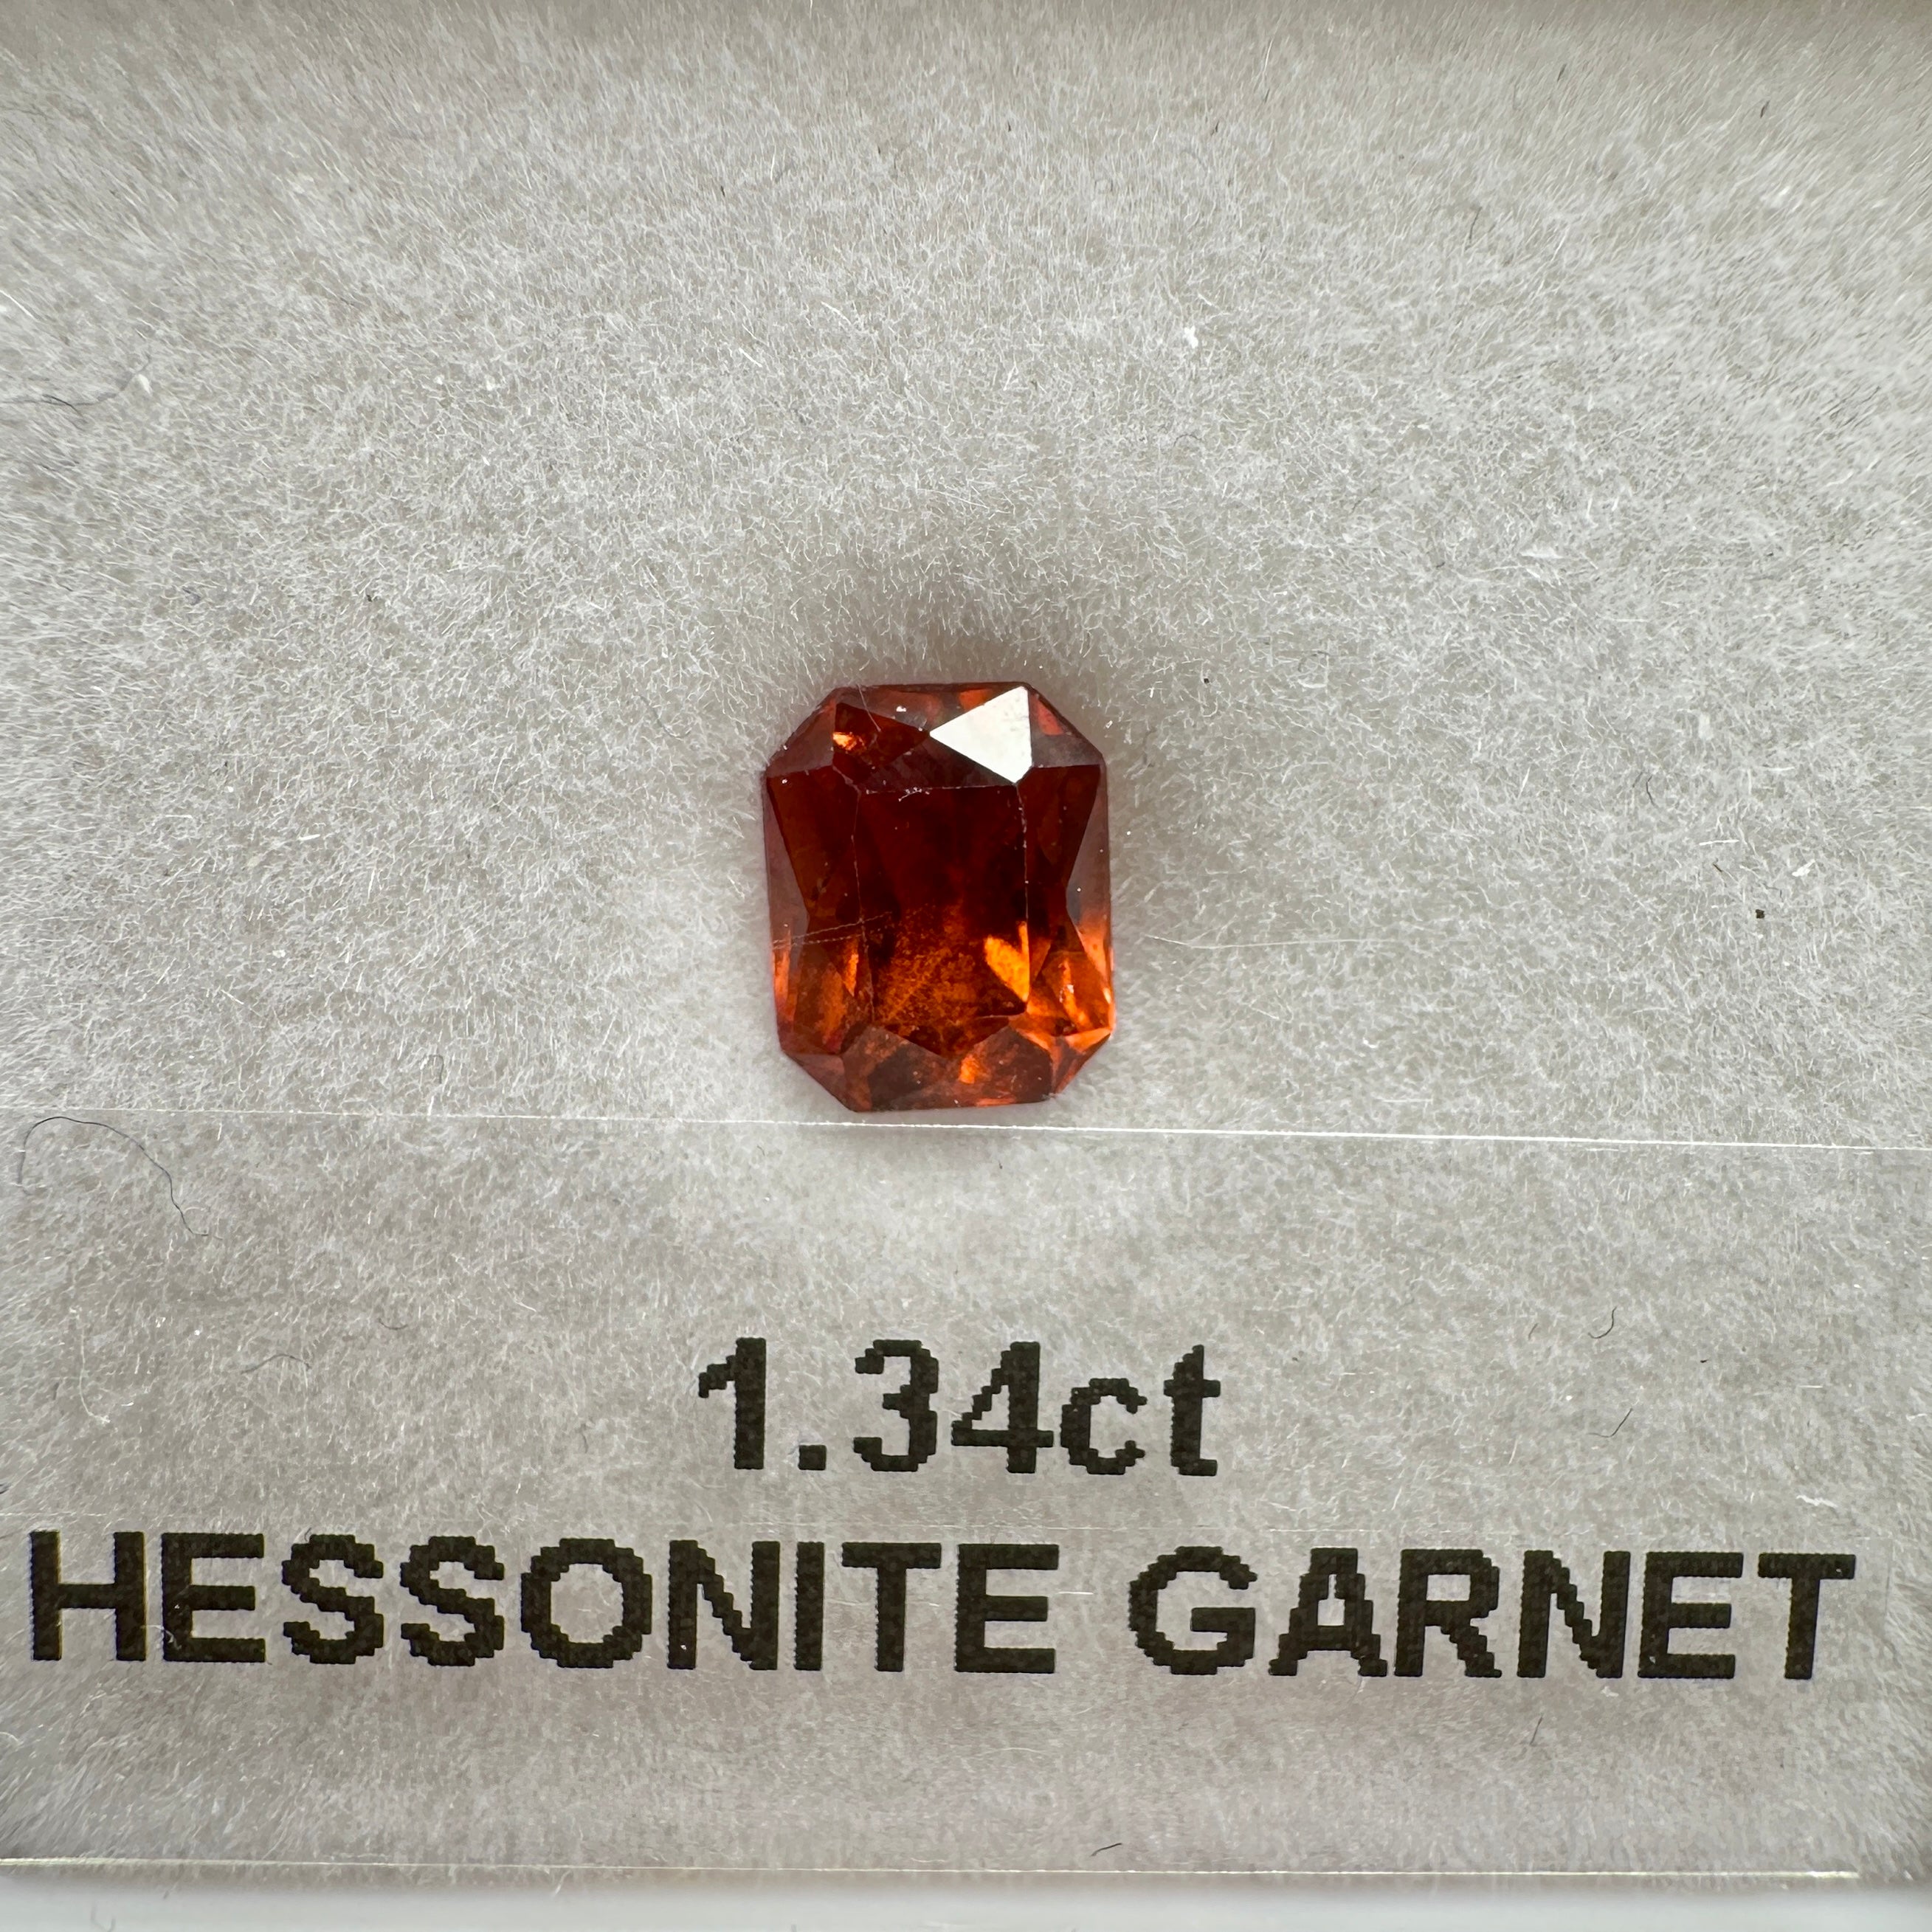 1.34ct Hessonite Garnet, Untreated Unheated, native cut